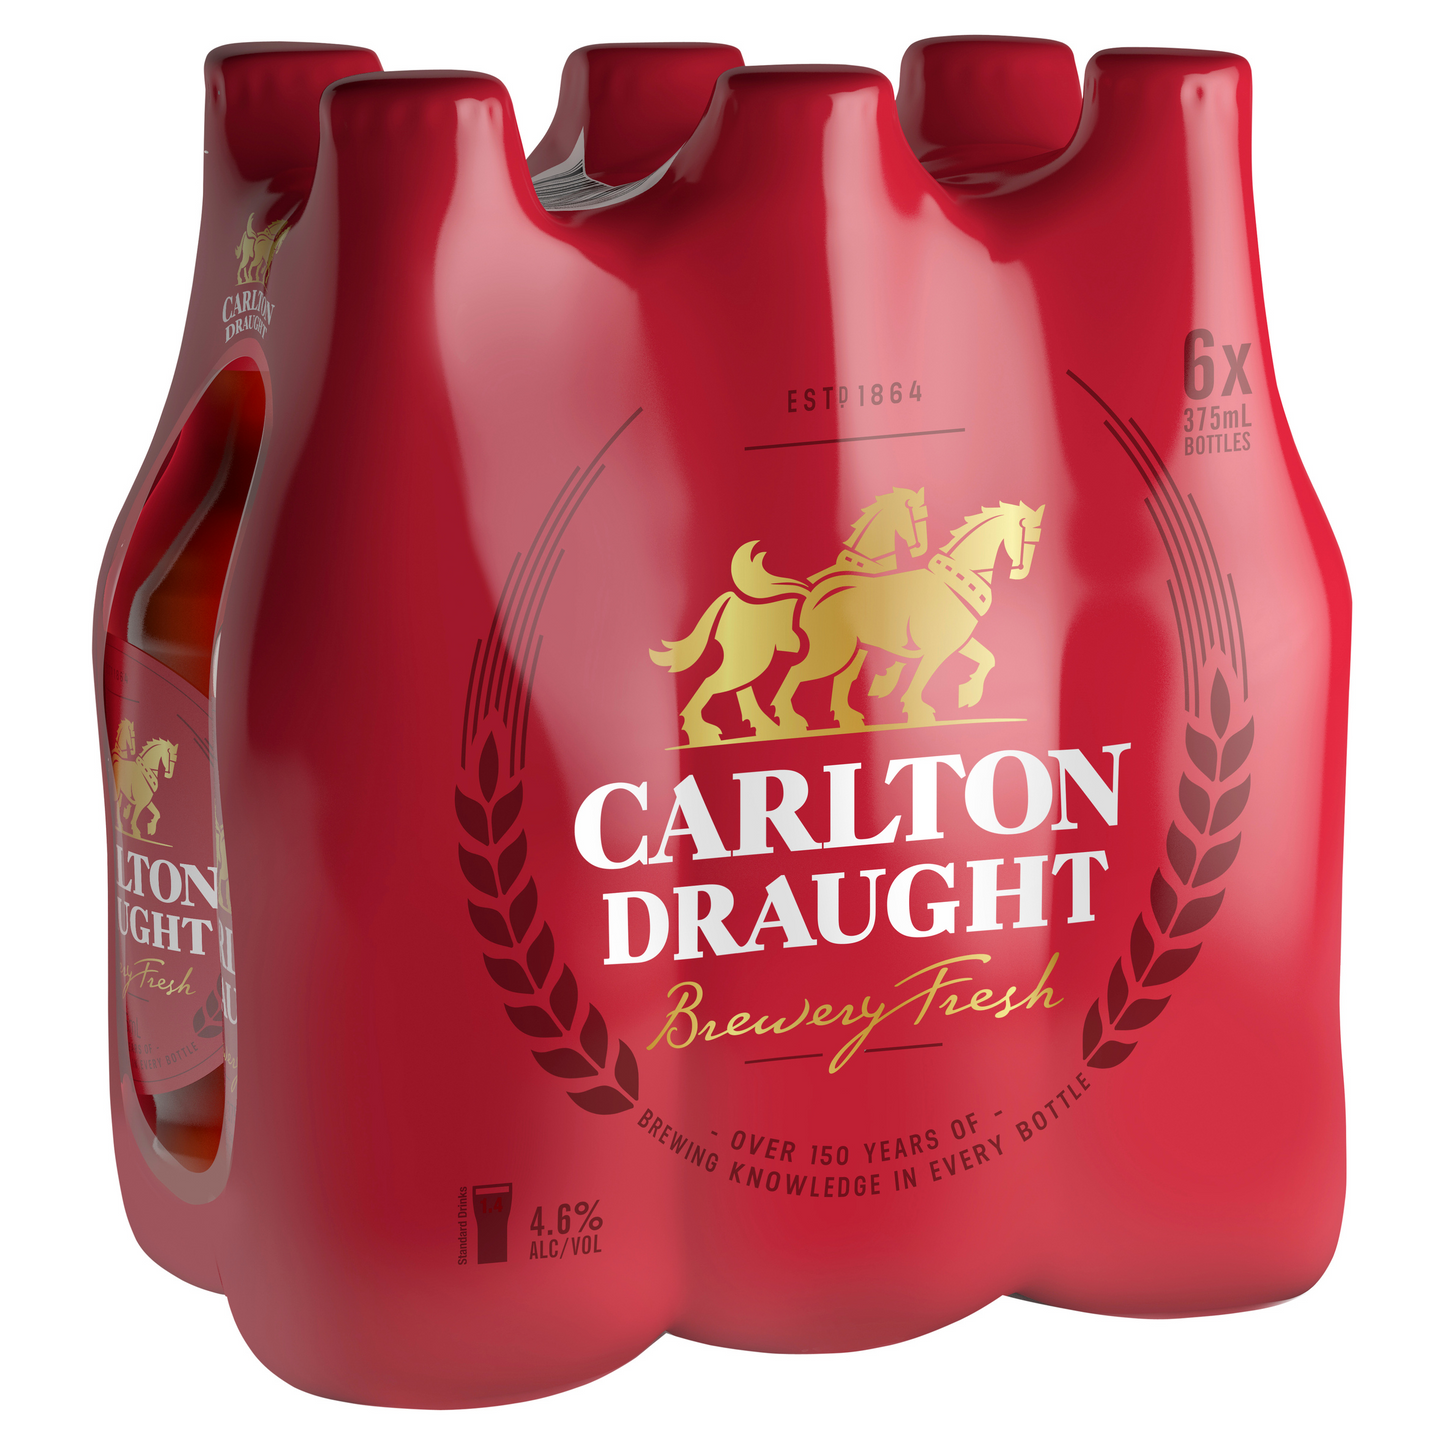 Carlton Draught 6x375mL Bottles